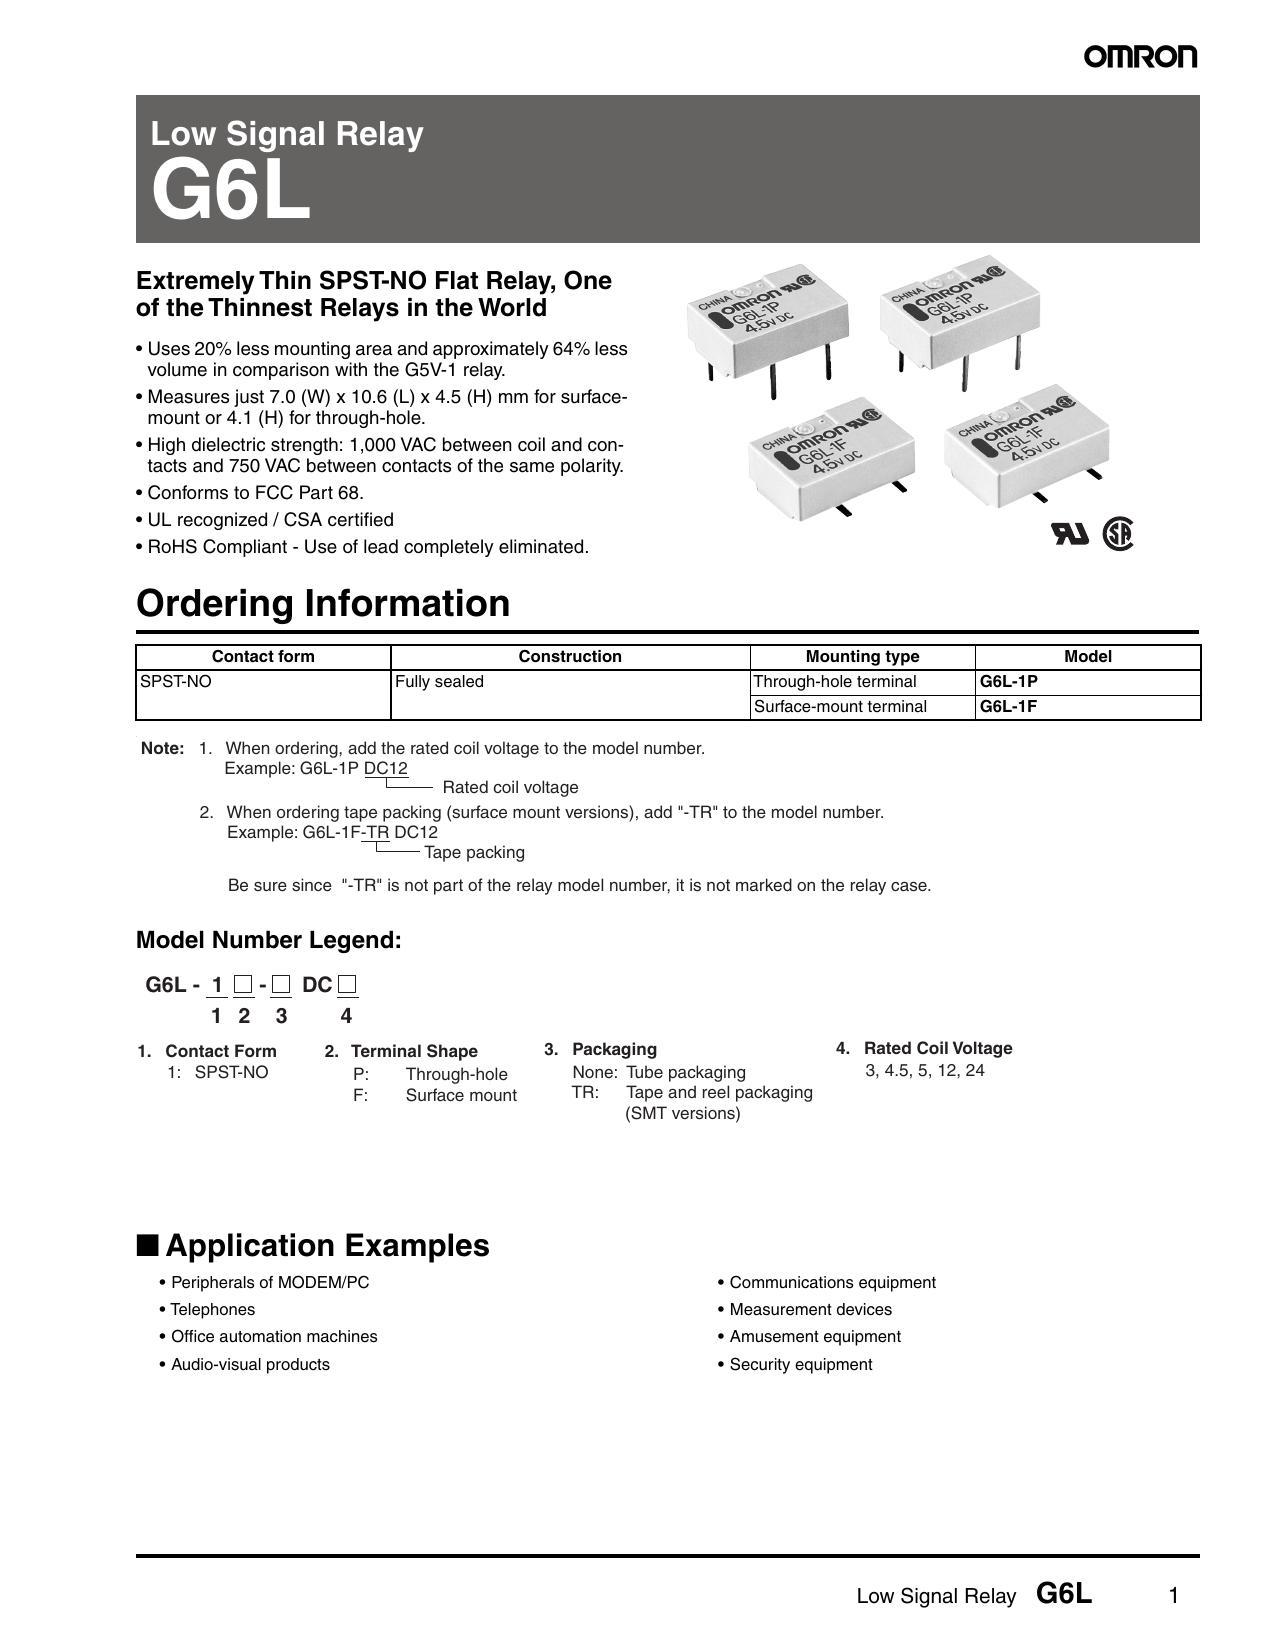 low-signal-relay-g6l-datasheet.pdf